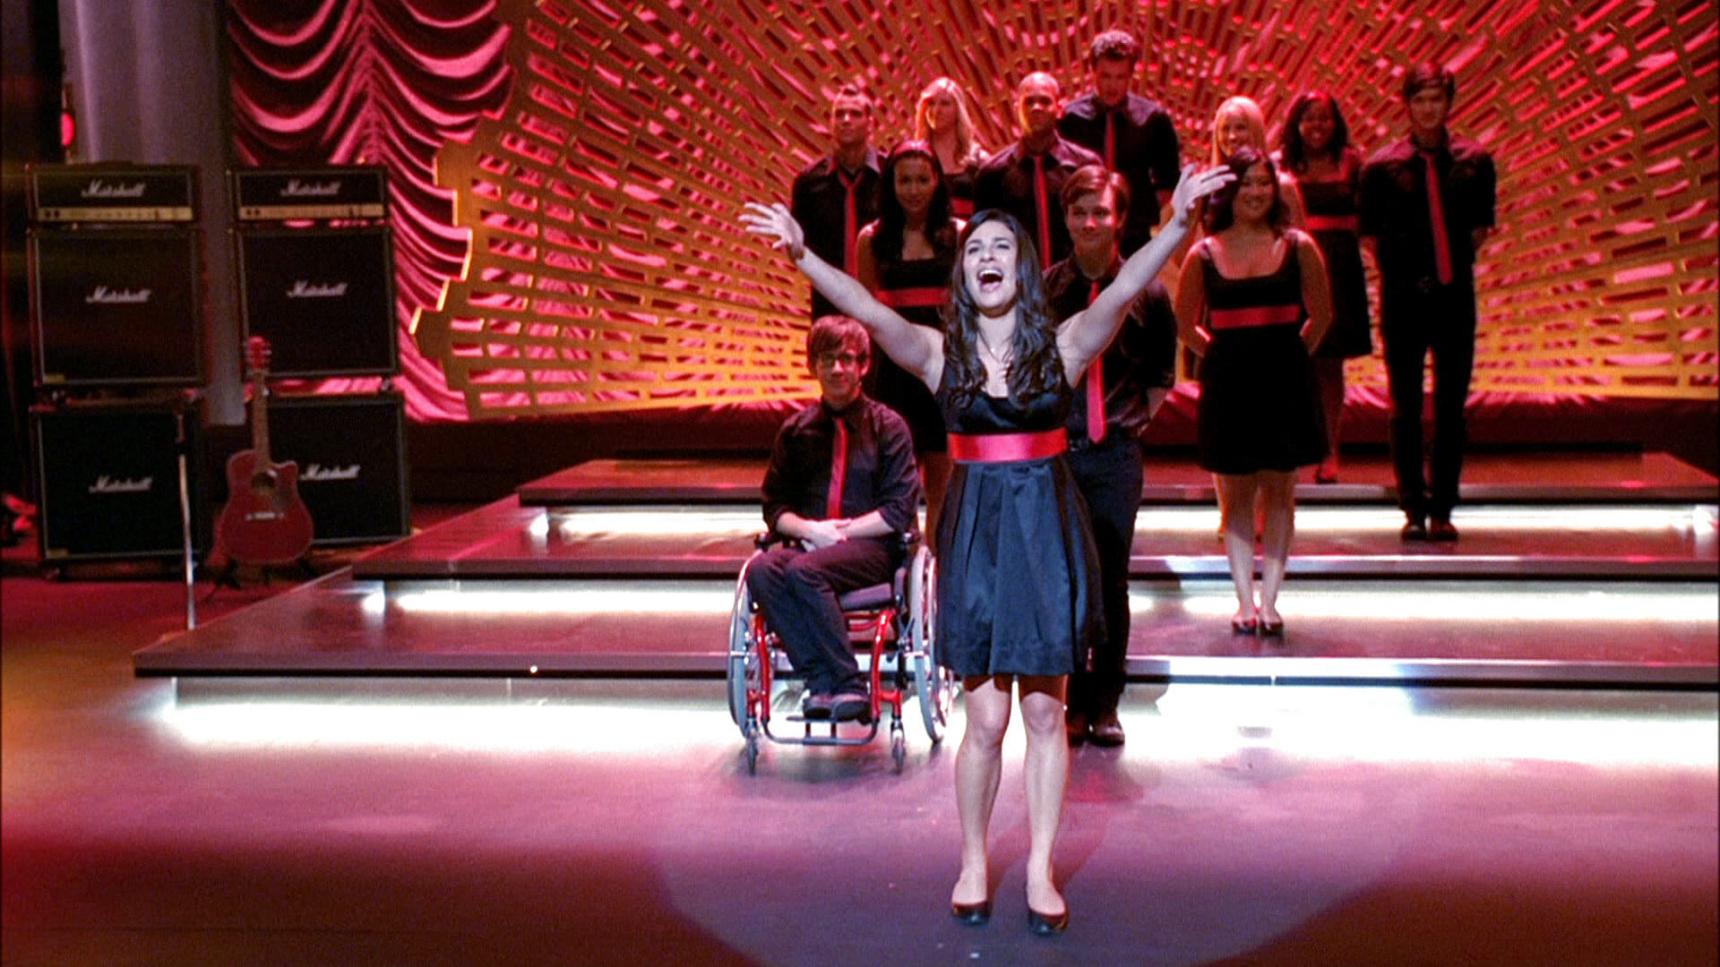 Poster del episodio 13 de Glee online